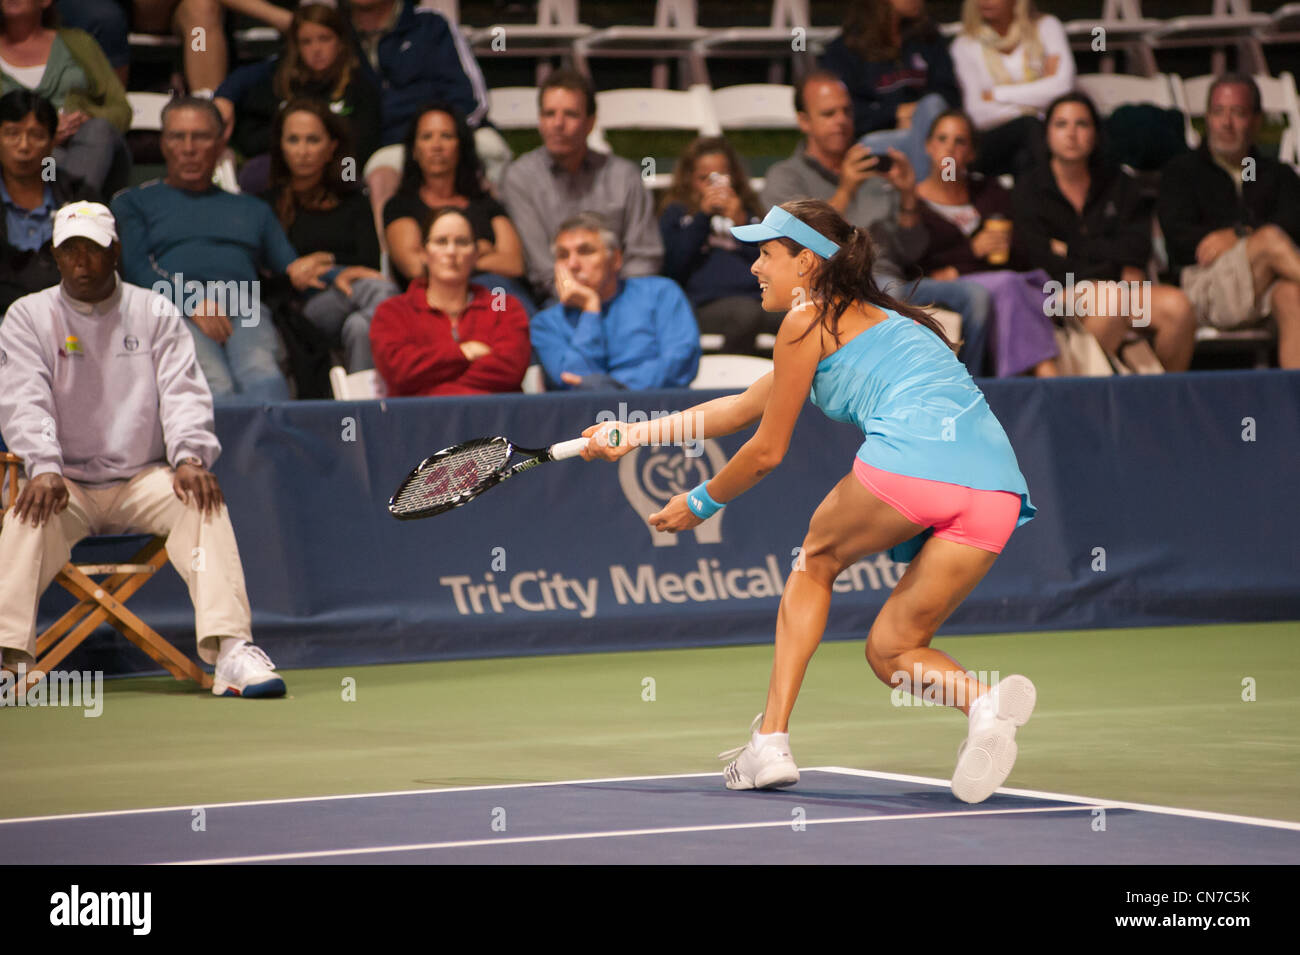 Tennis player, Ana Ivanovic, competing in Mercury Insurance Open at La Costa Resort. Stock Photo